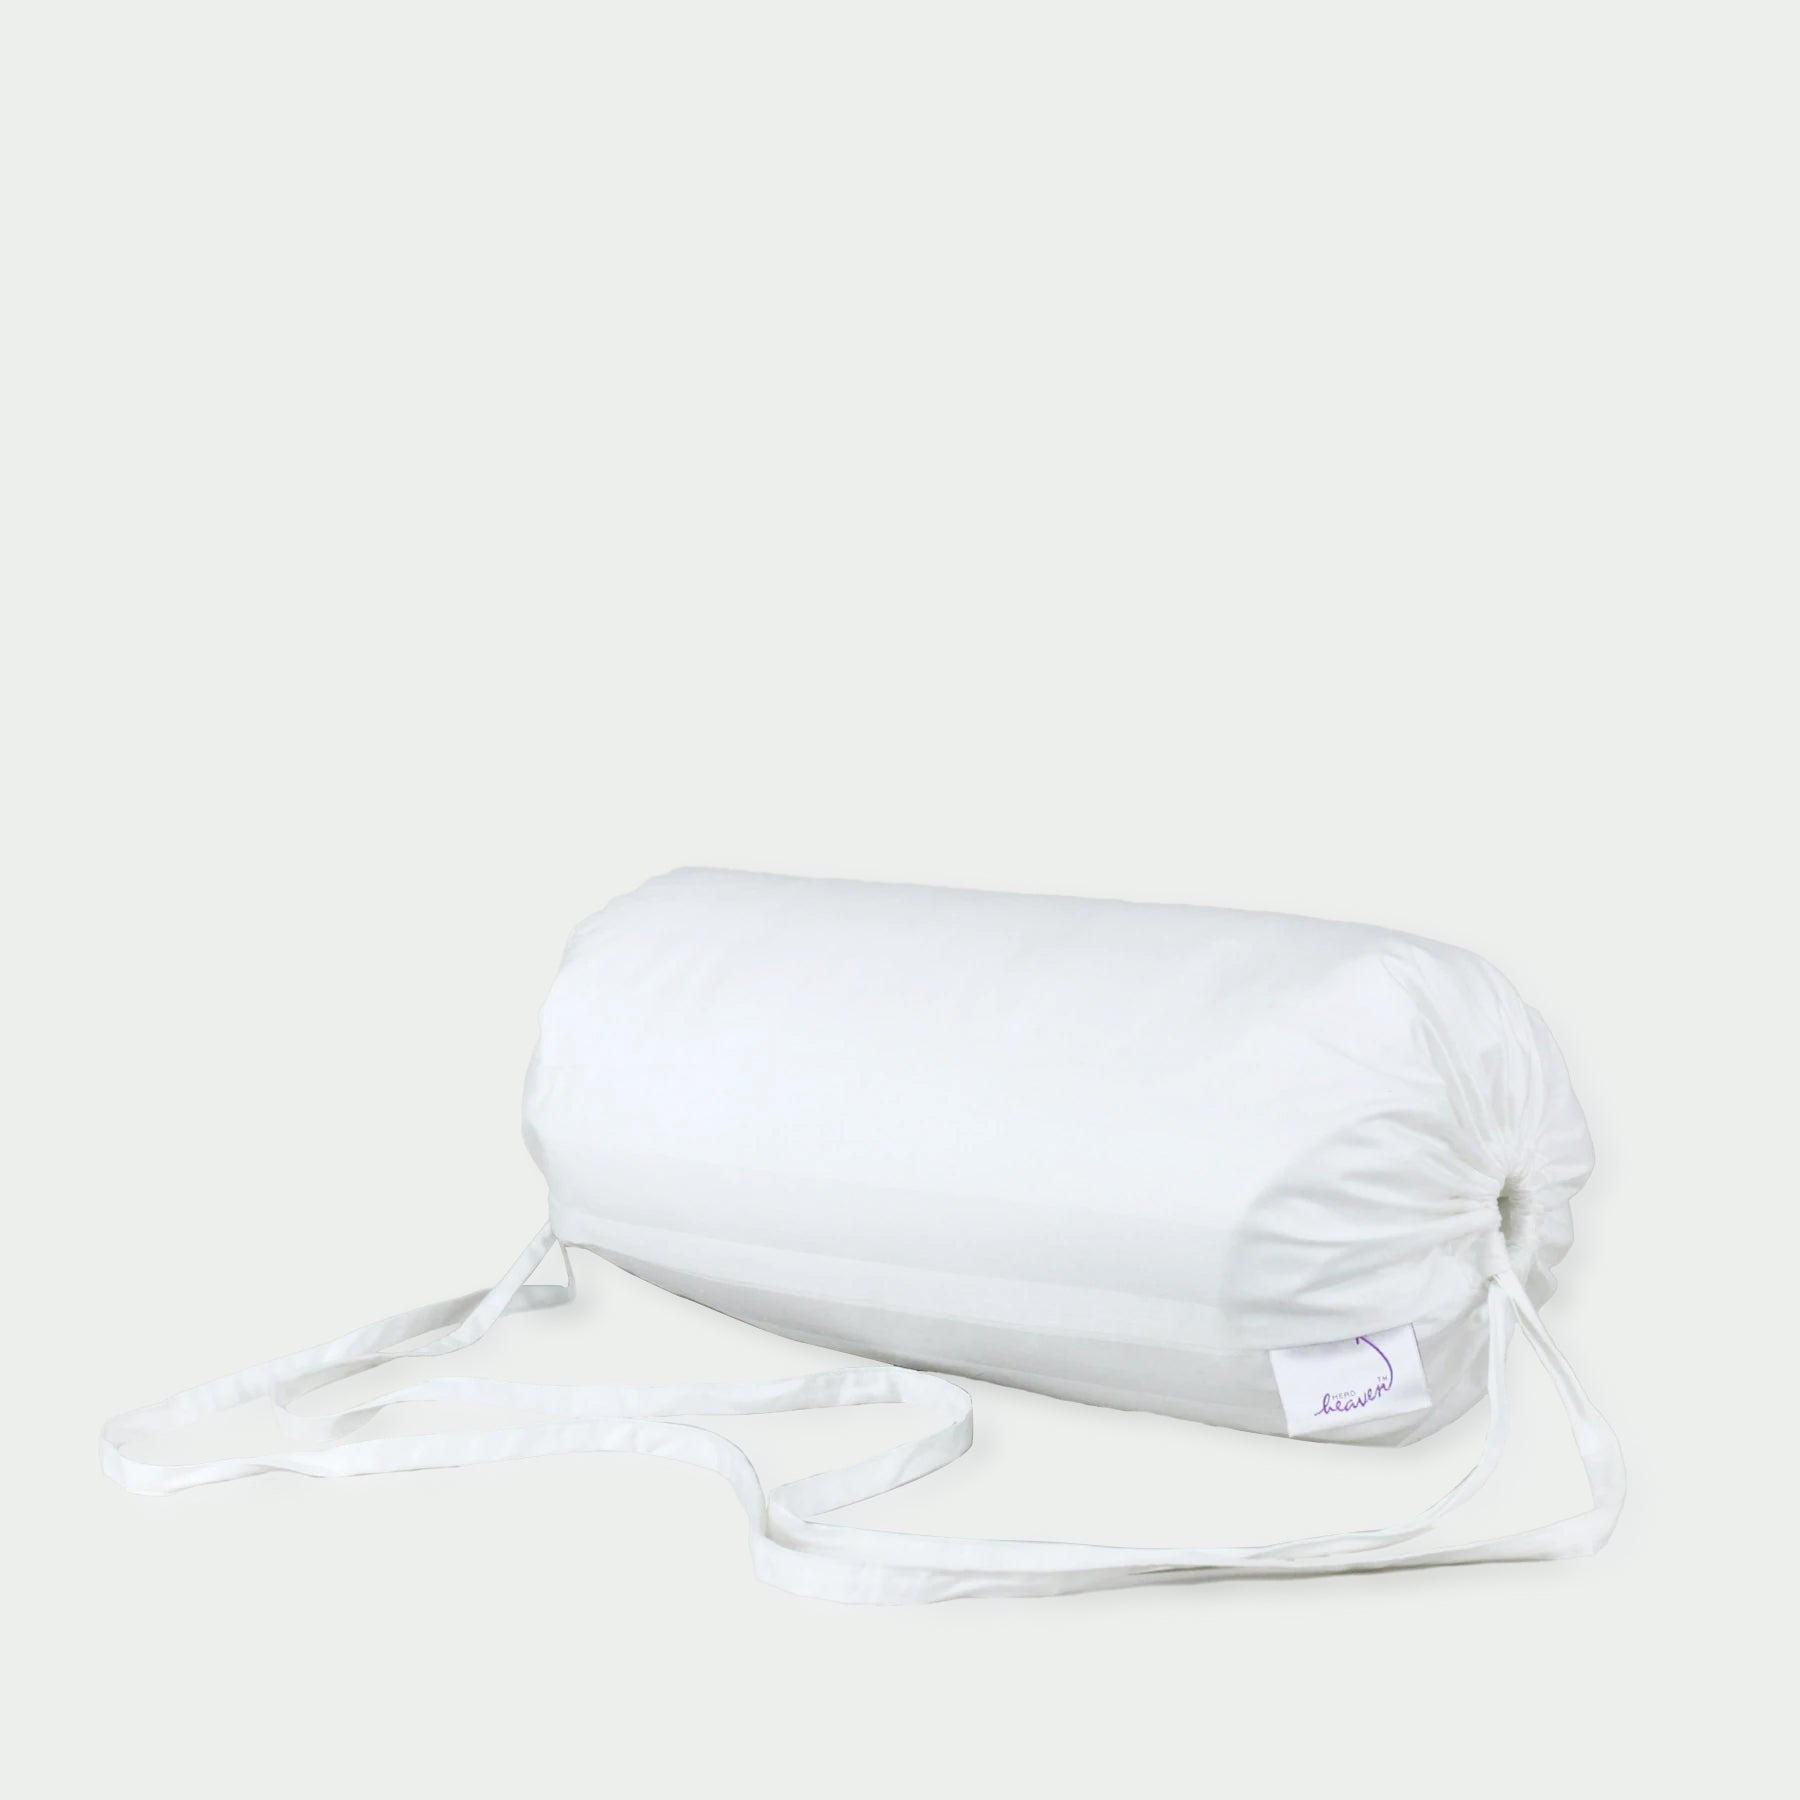 head heaven® travel pillow, pillowcase, and knapsack in white